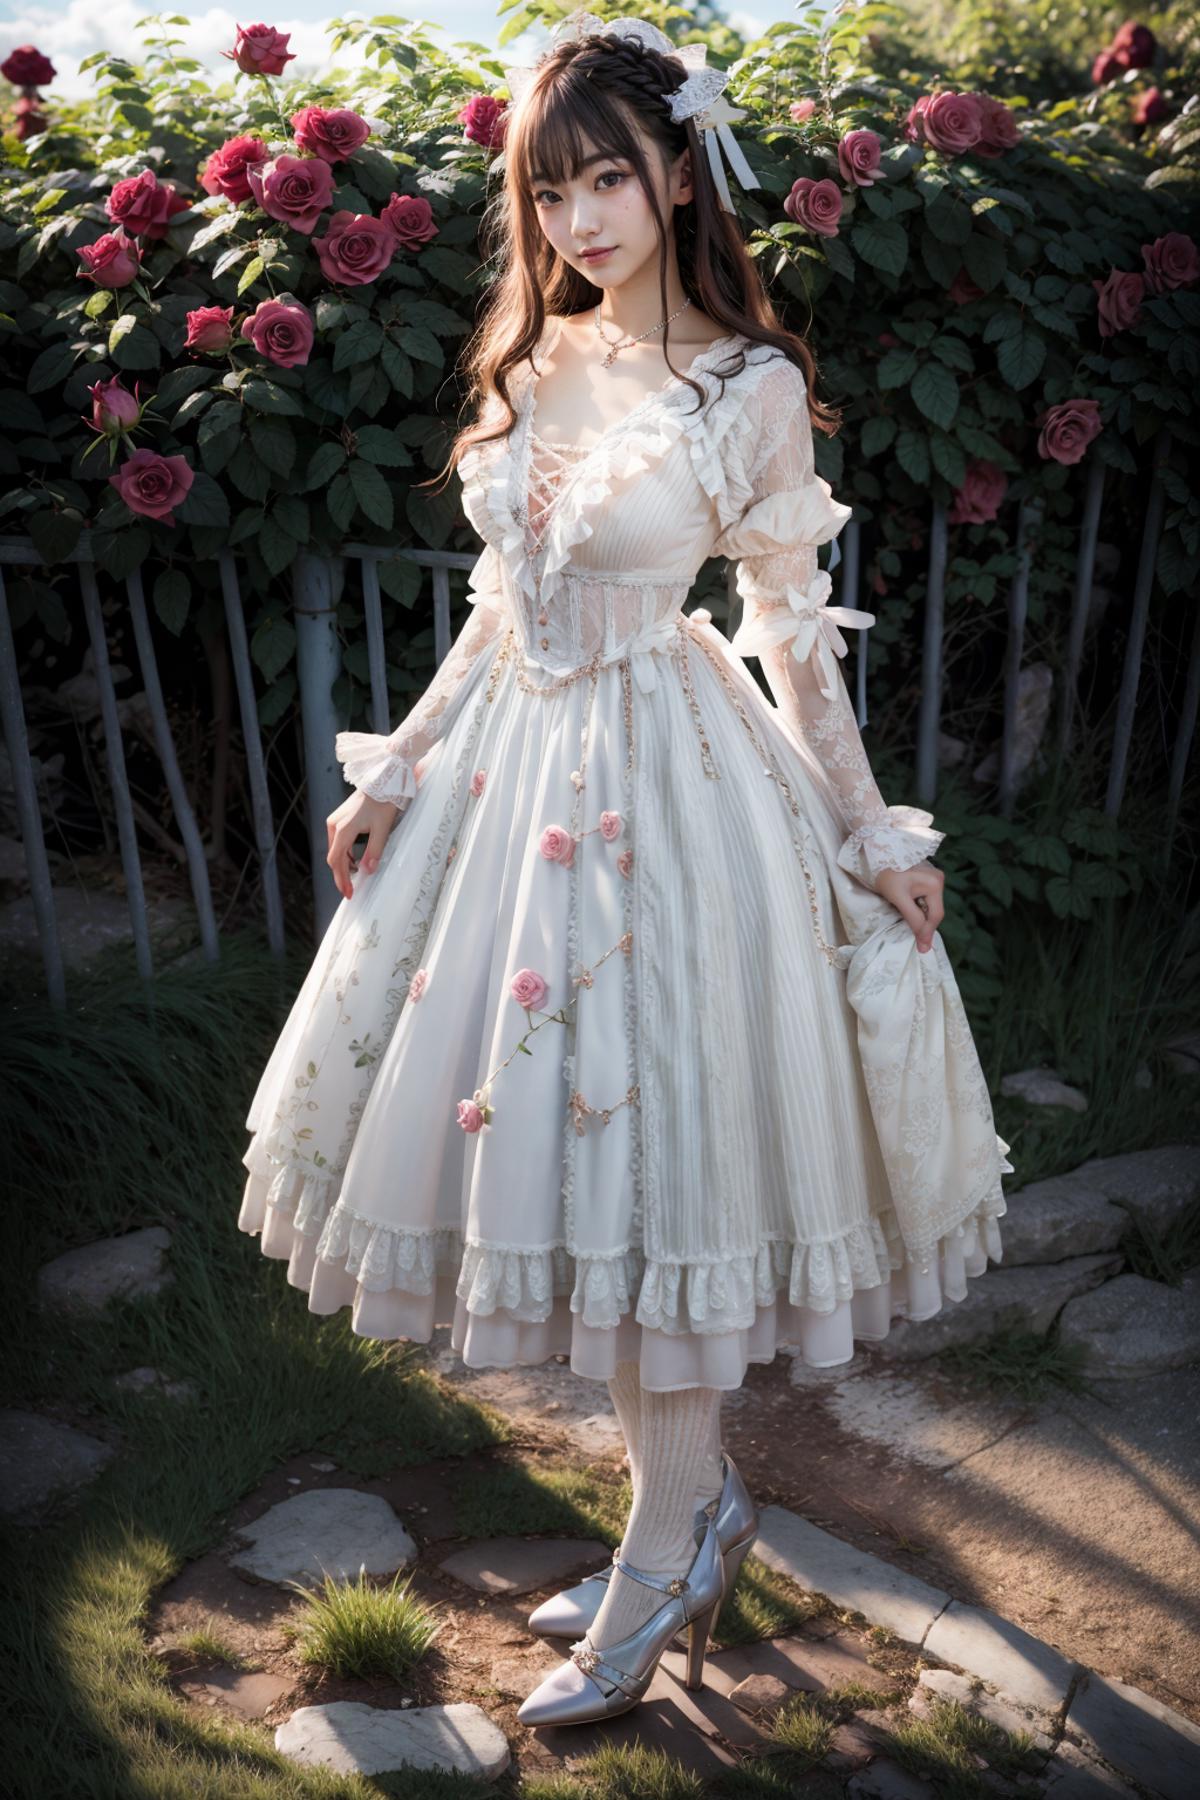 【琥珀鎏金】Dress No.8 White Dress image by feetie